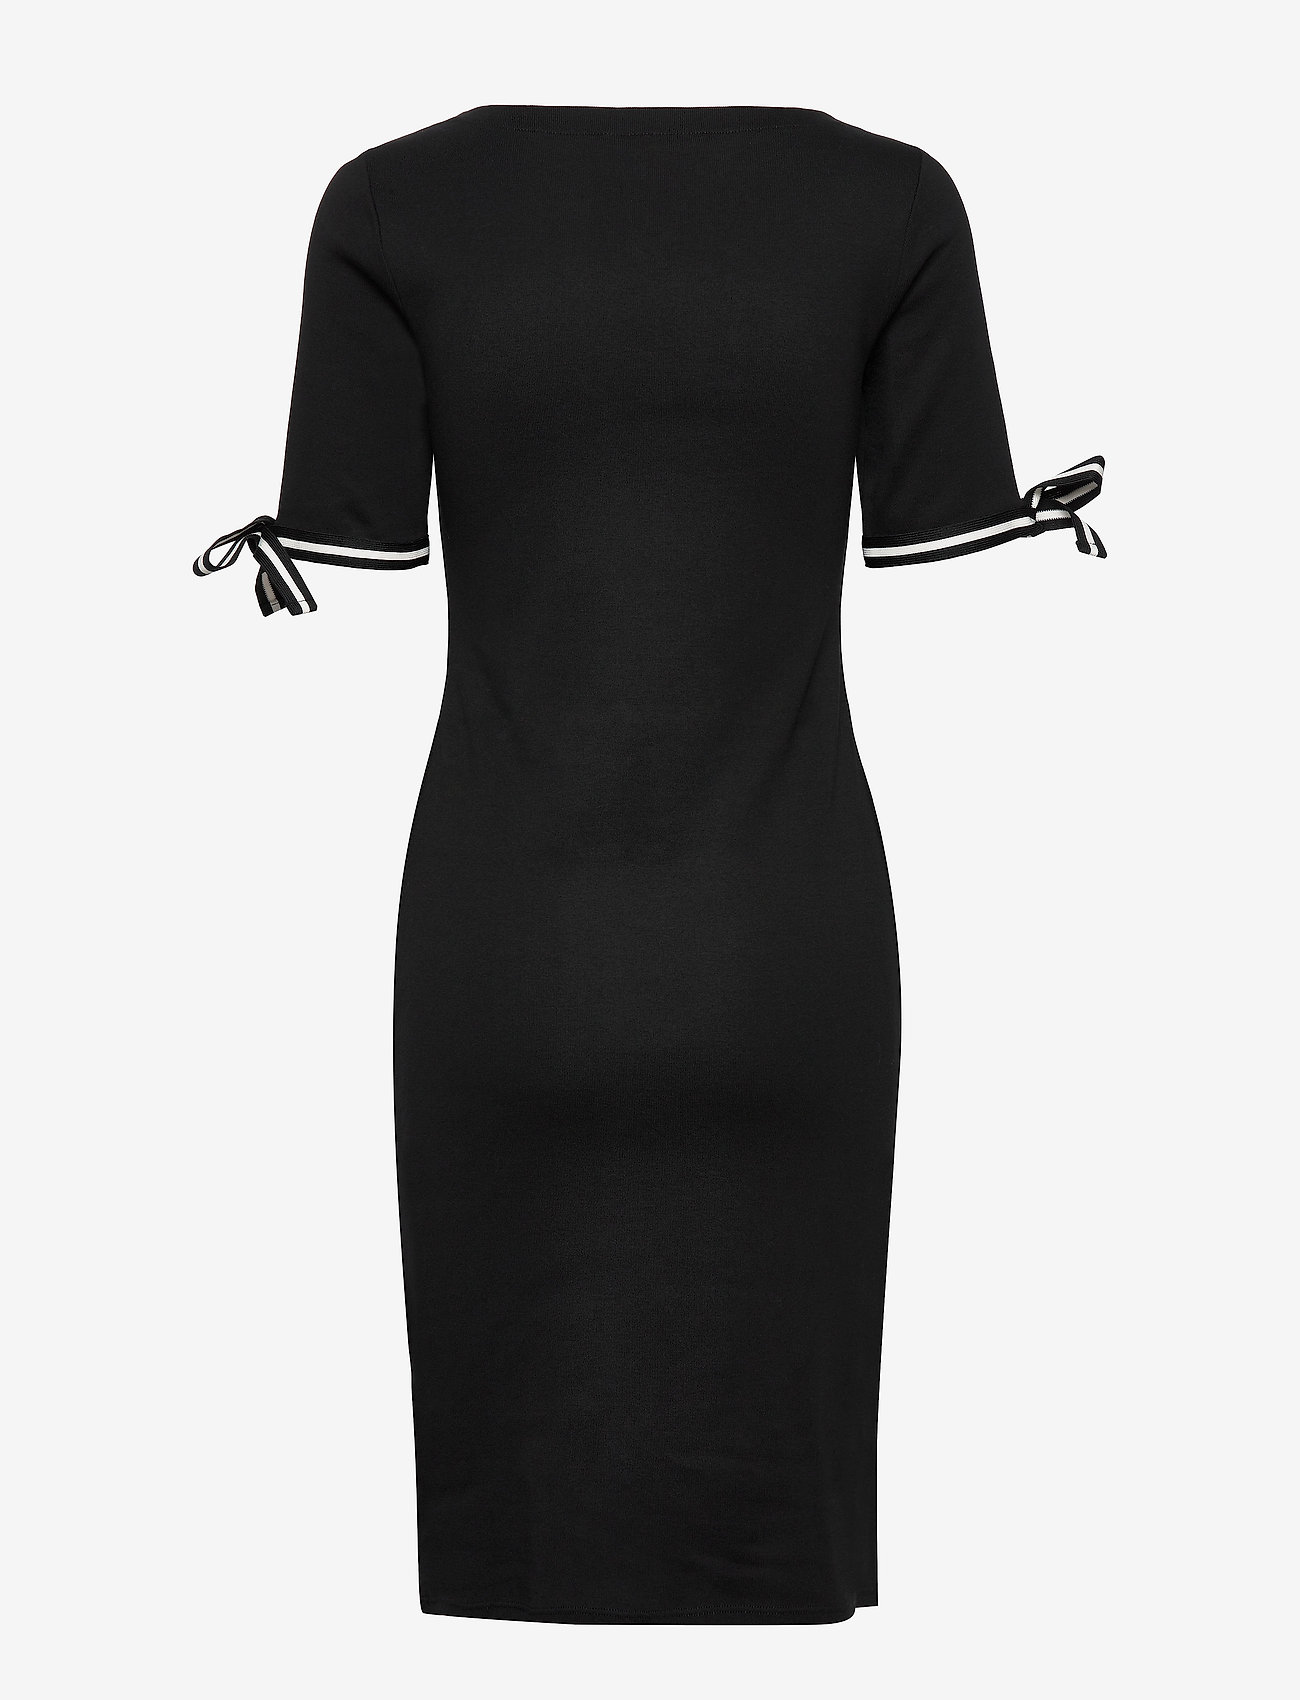 polo black dress